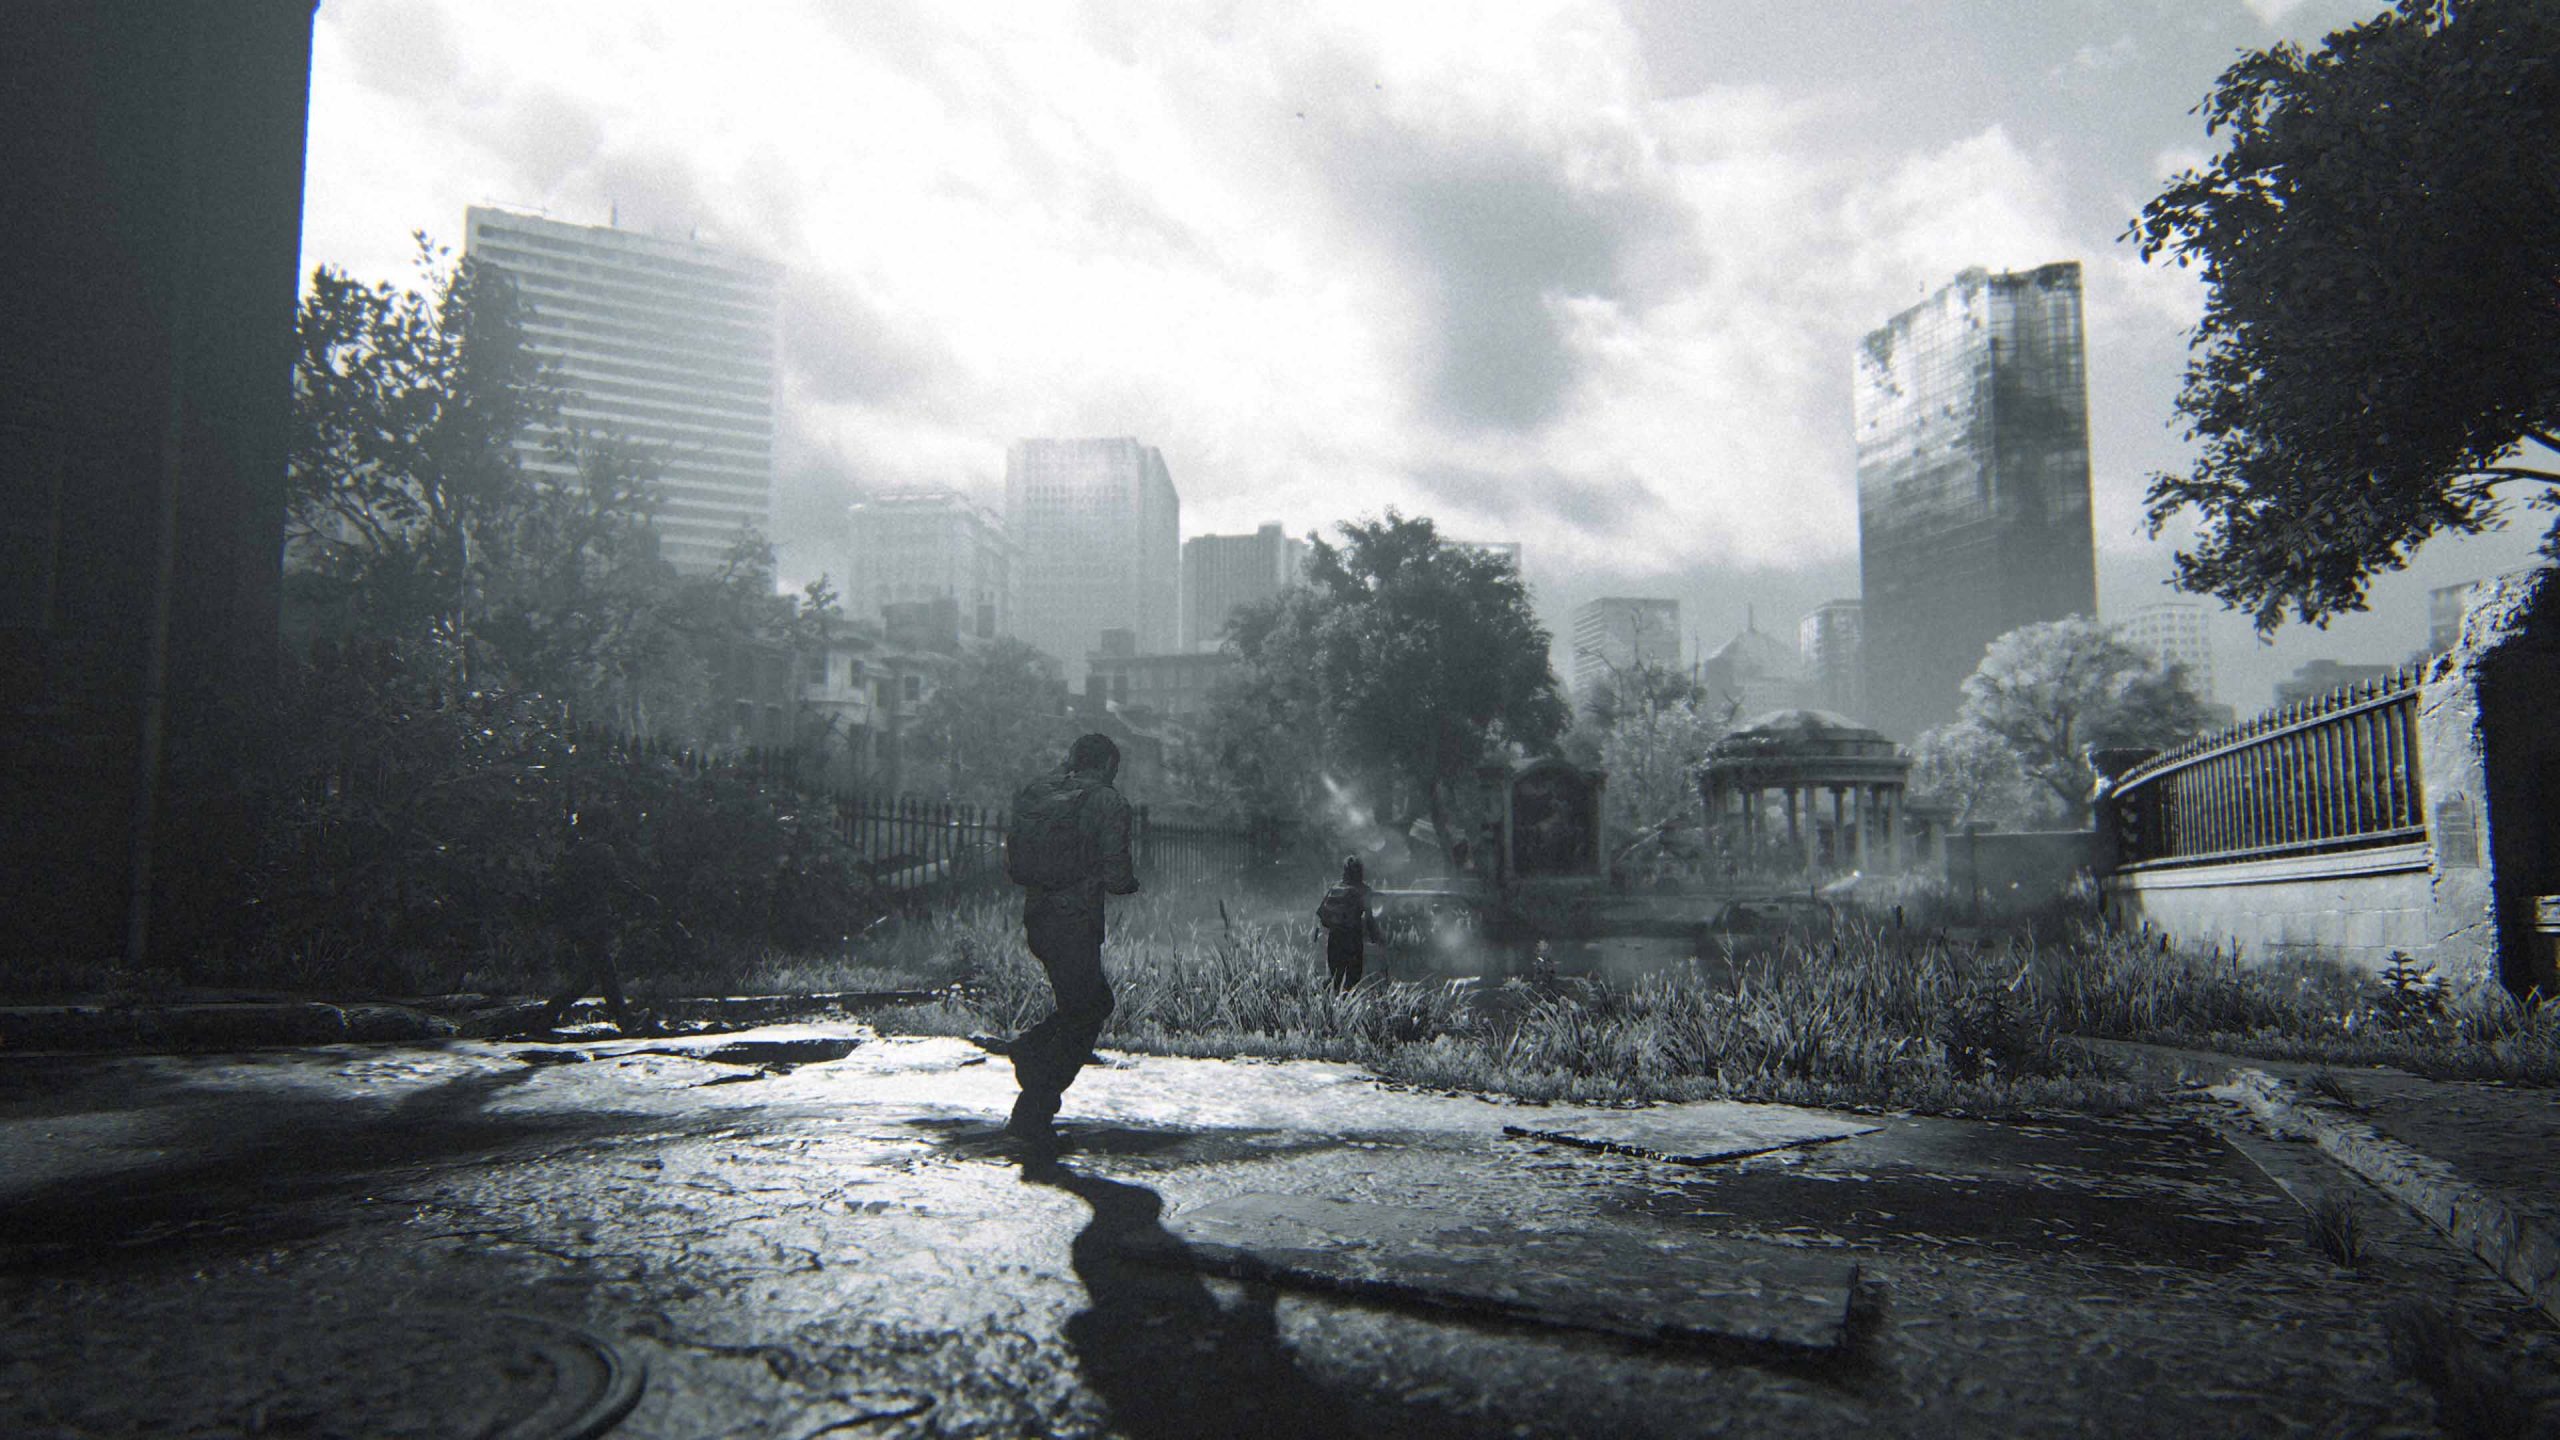 Análise: The Last of Us Part I eleva jogo a outro nível